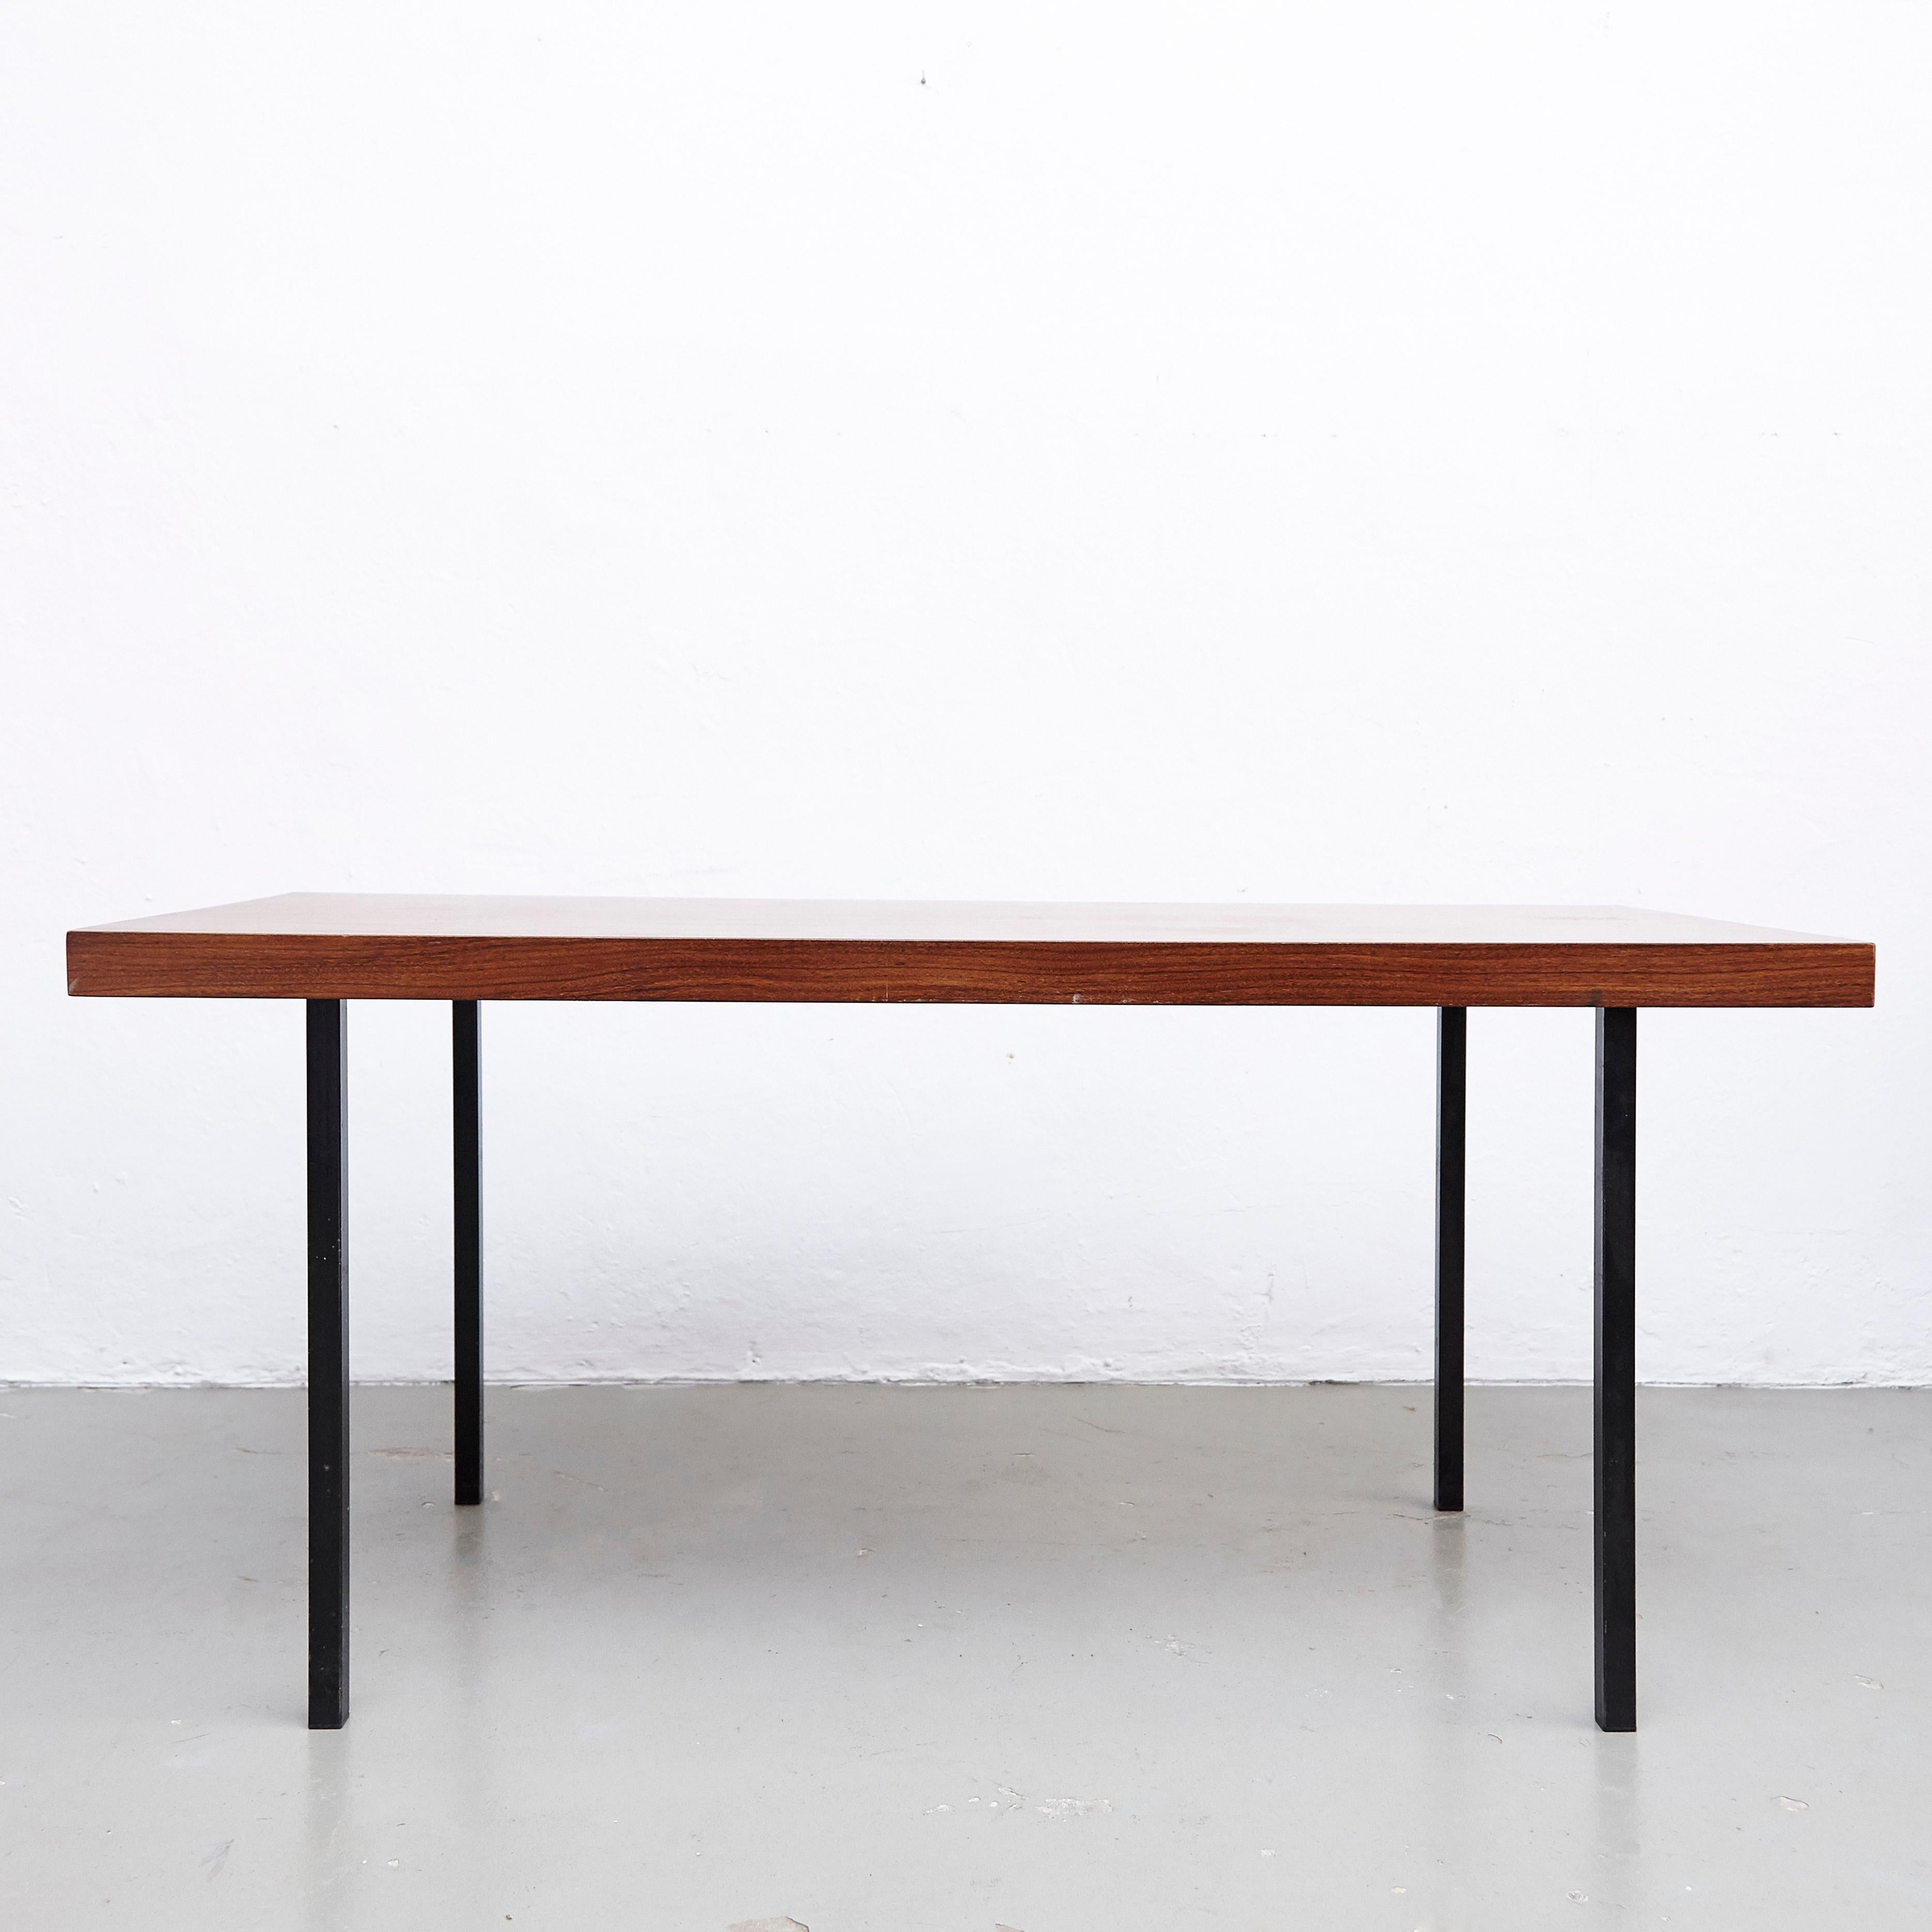 Kho Liang Le, Mid Century Modern, Wood Metal, Dining Table, circa 1950 (Moderne der Mitte des Jahrhunderts)